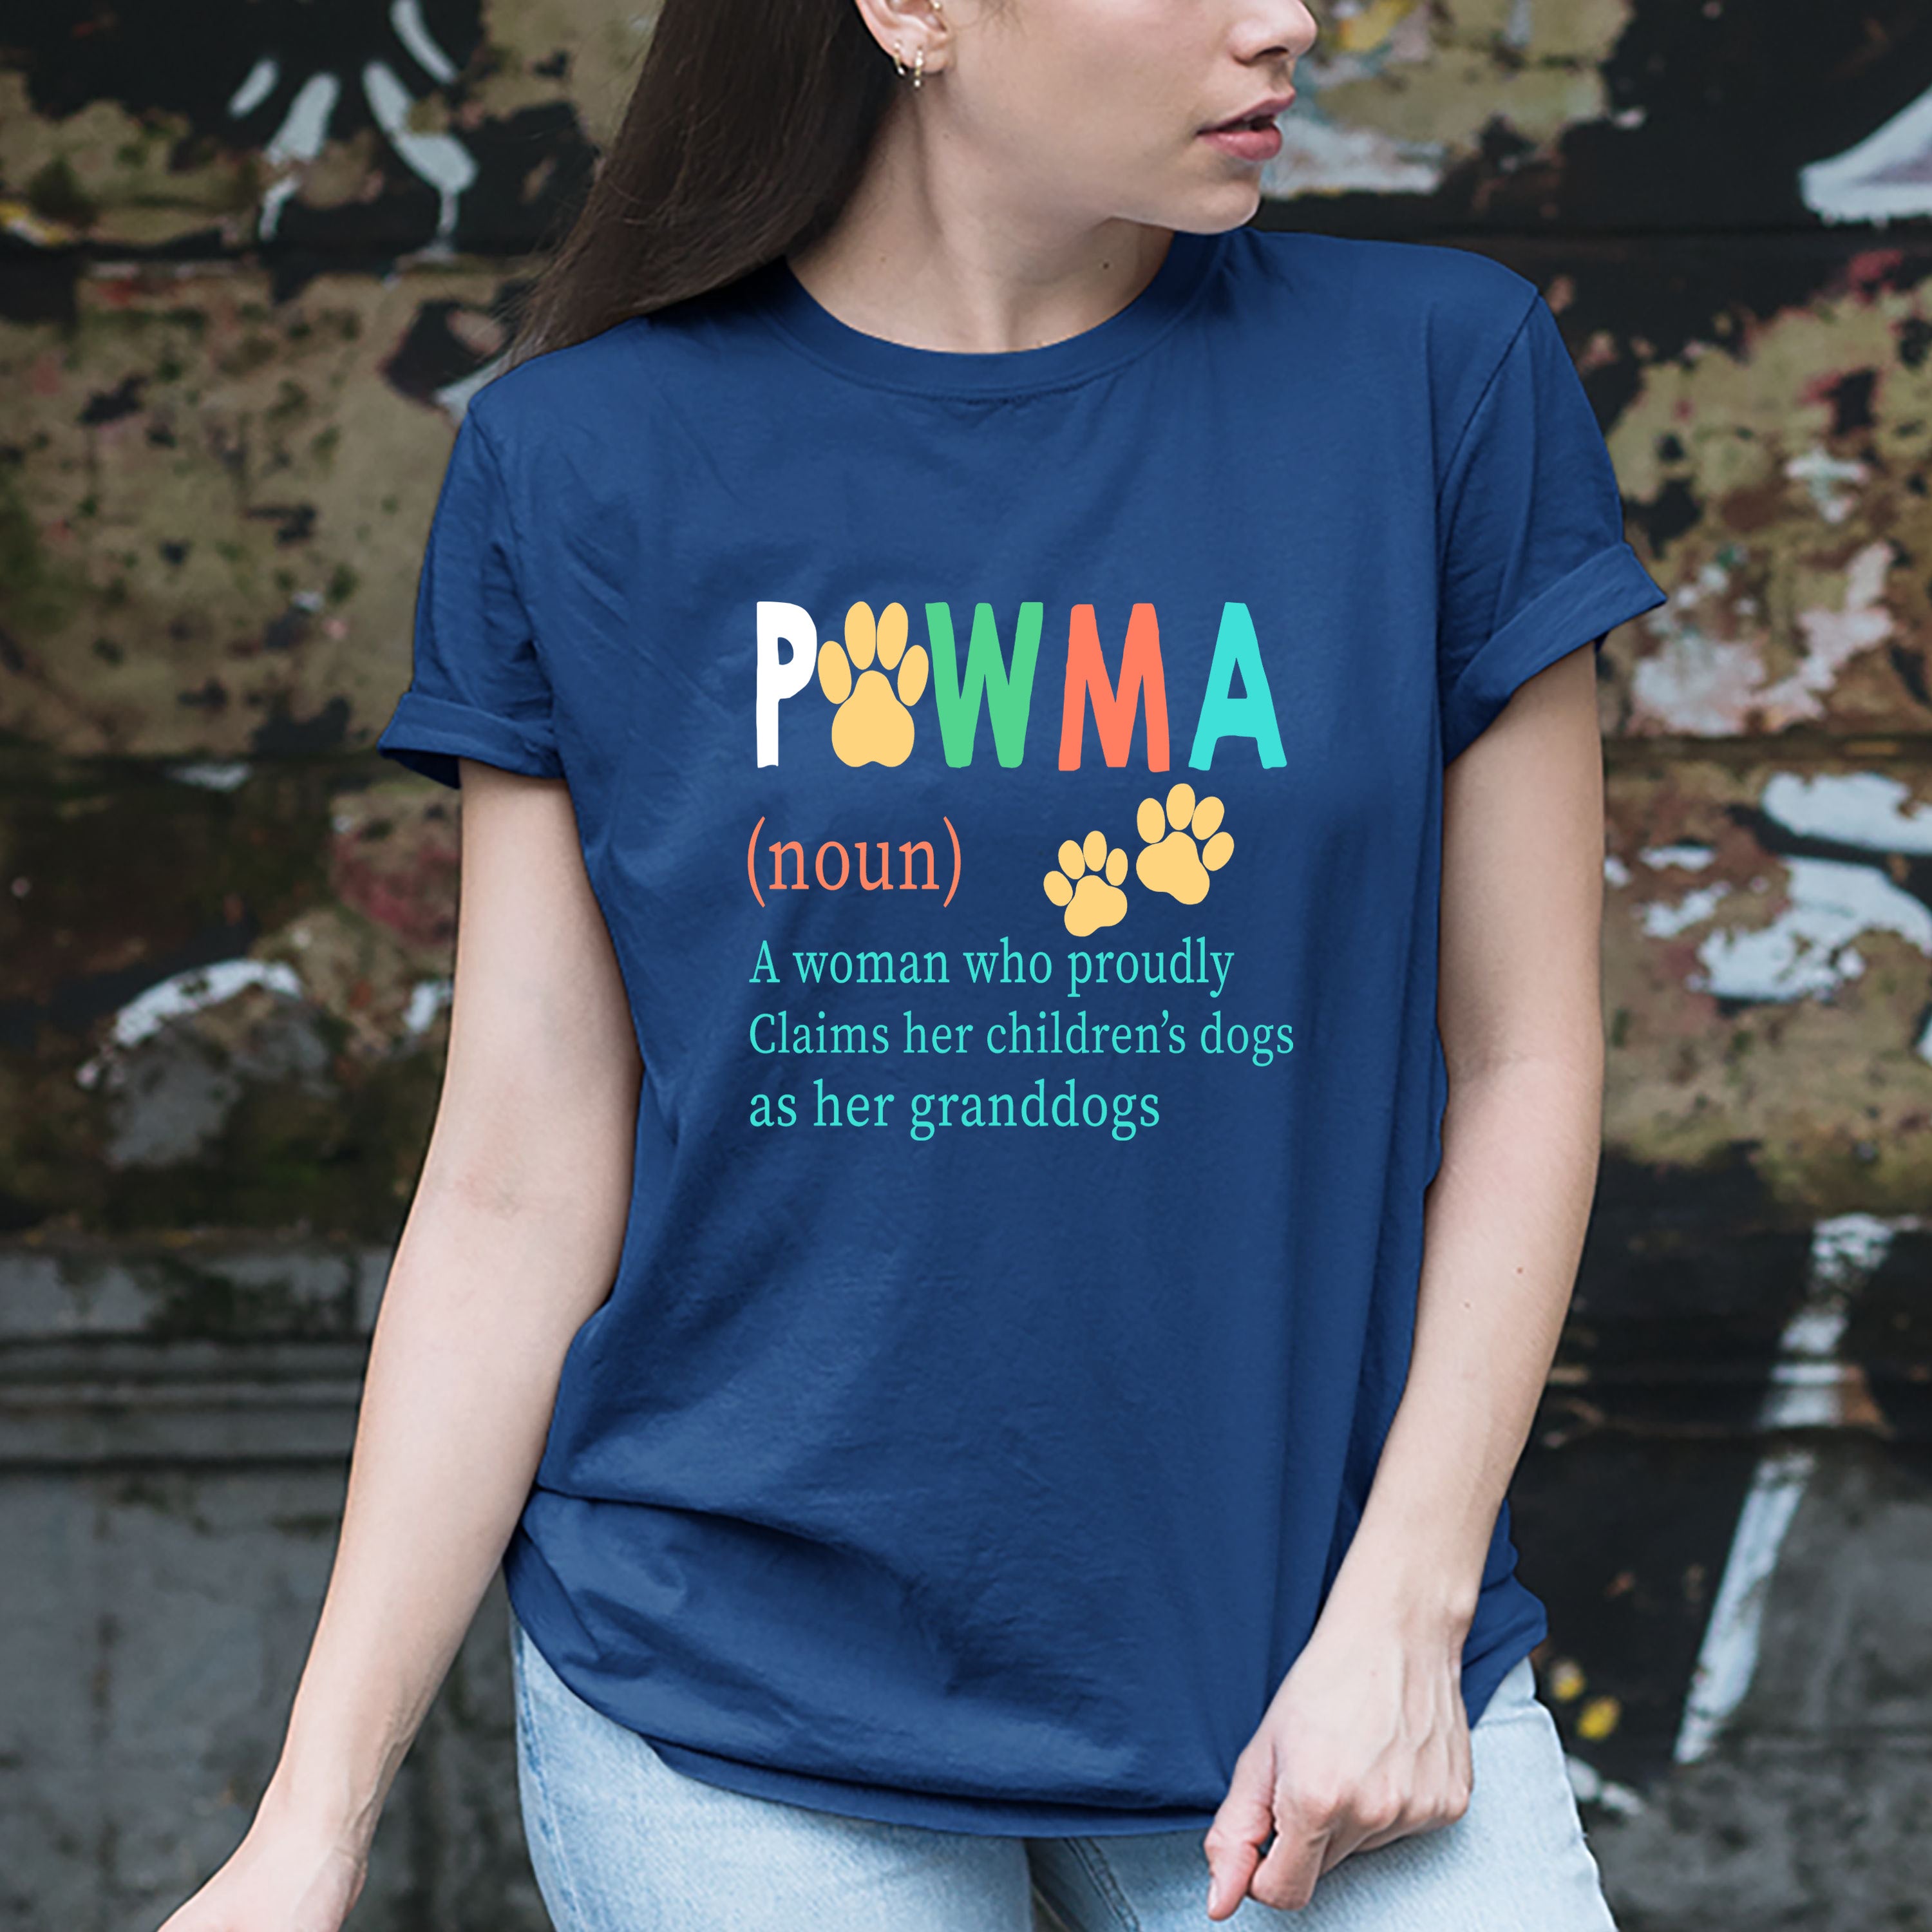 "PAWMA"